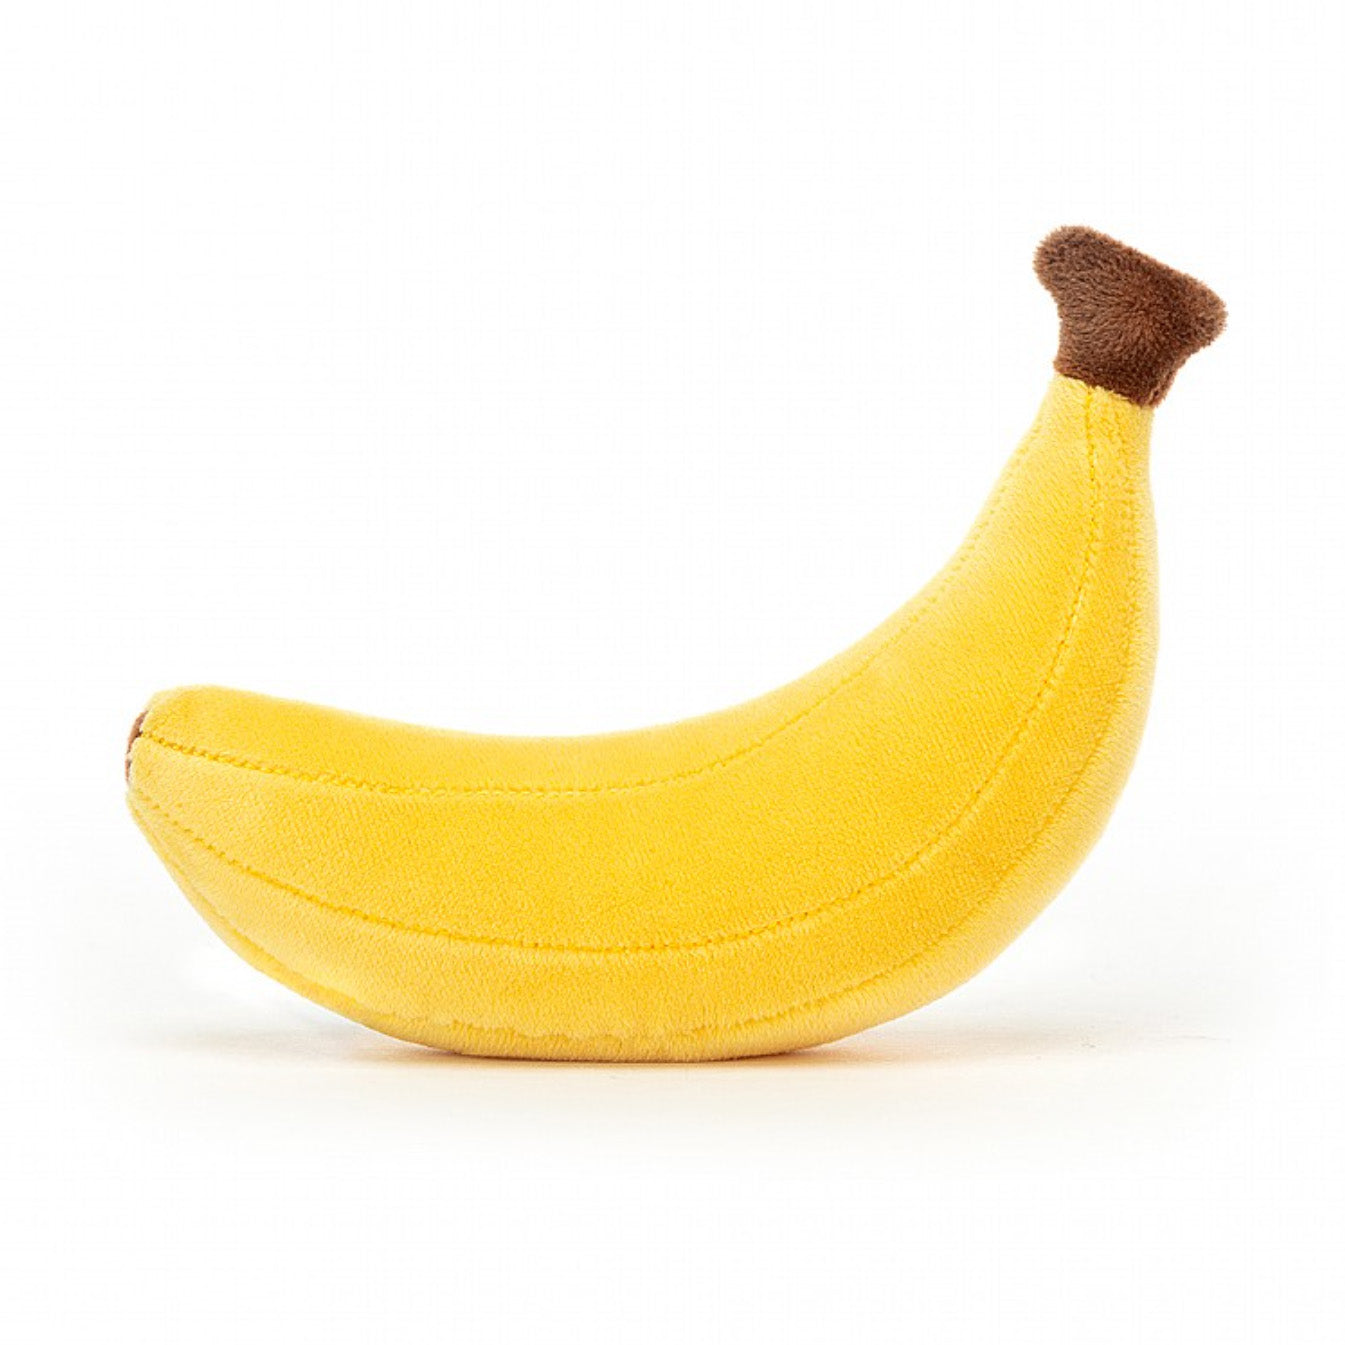 fabulous fruit banana